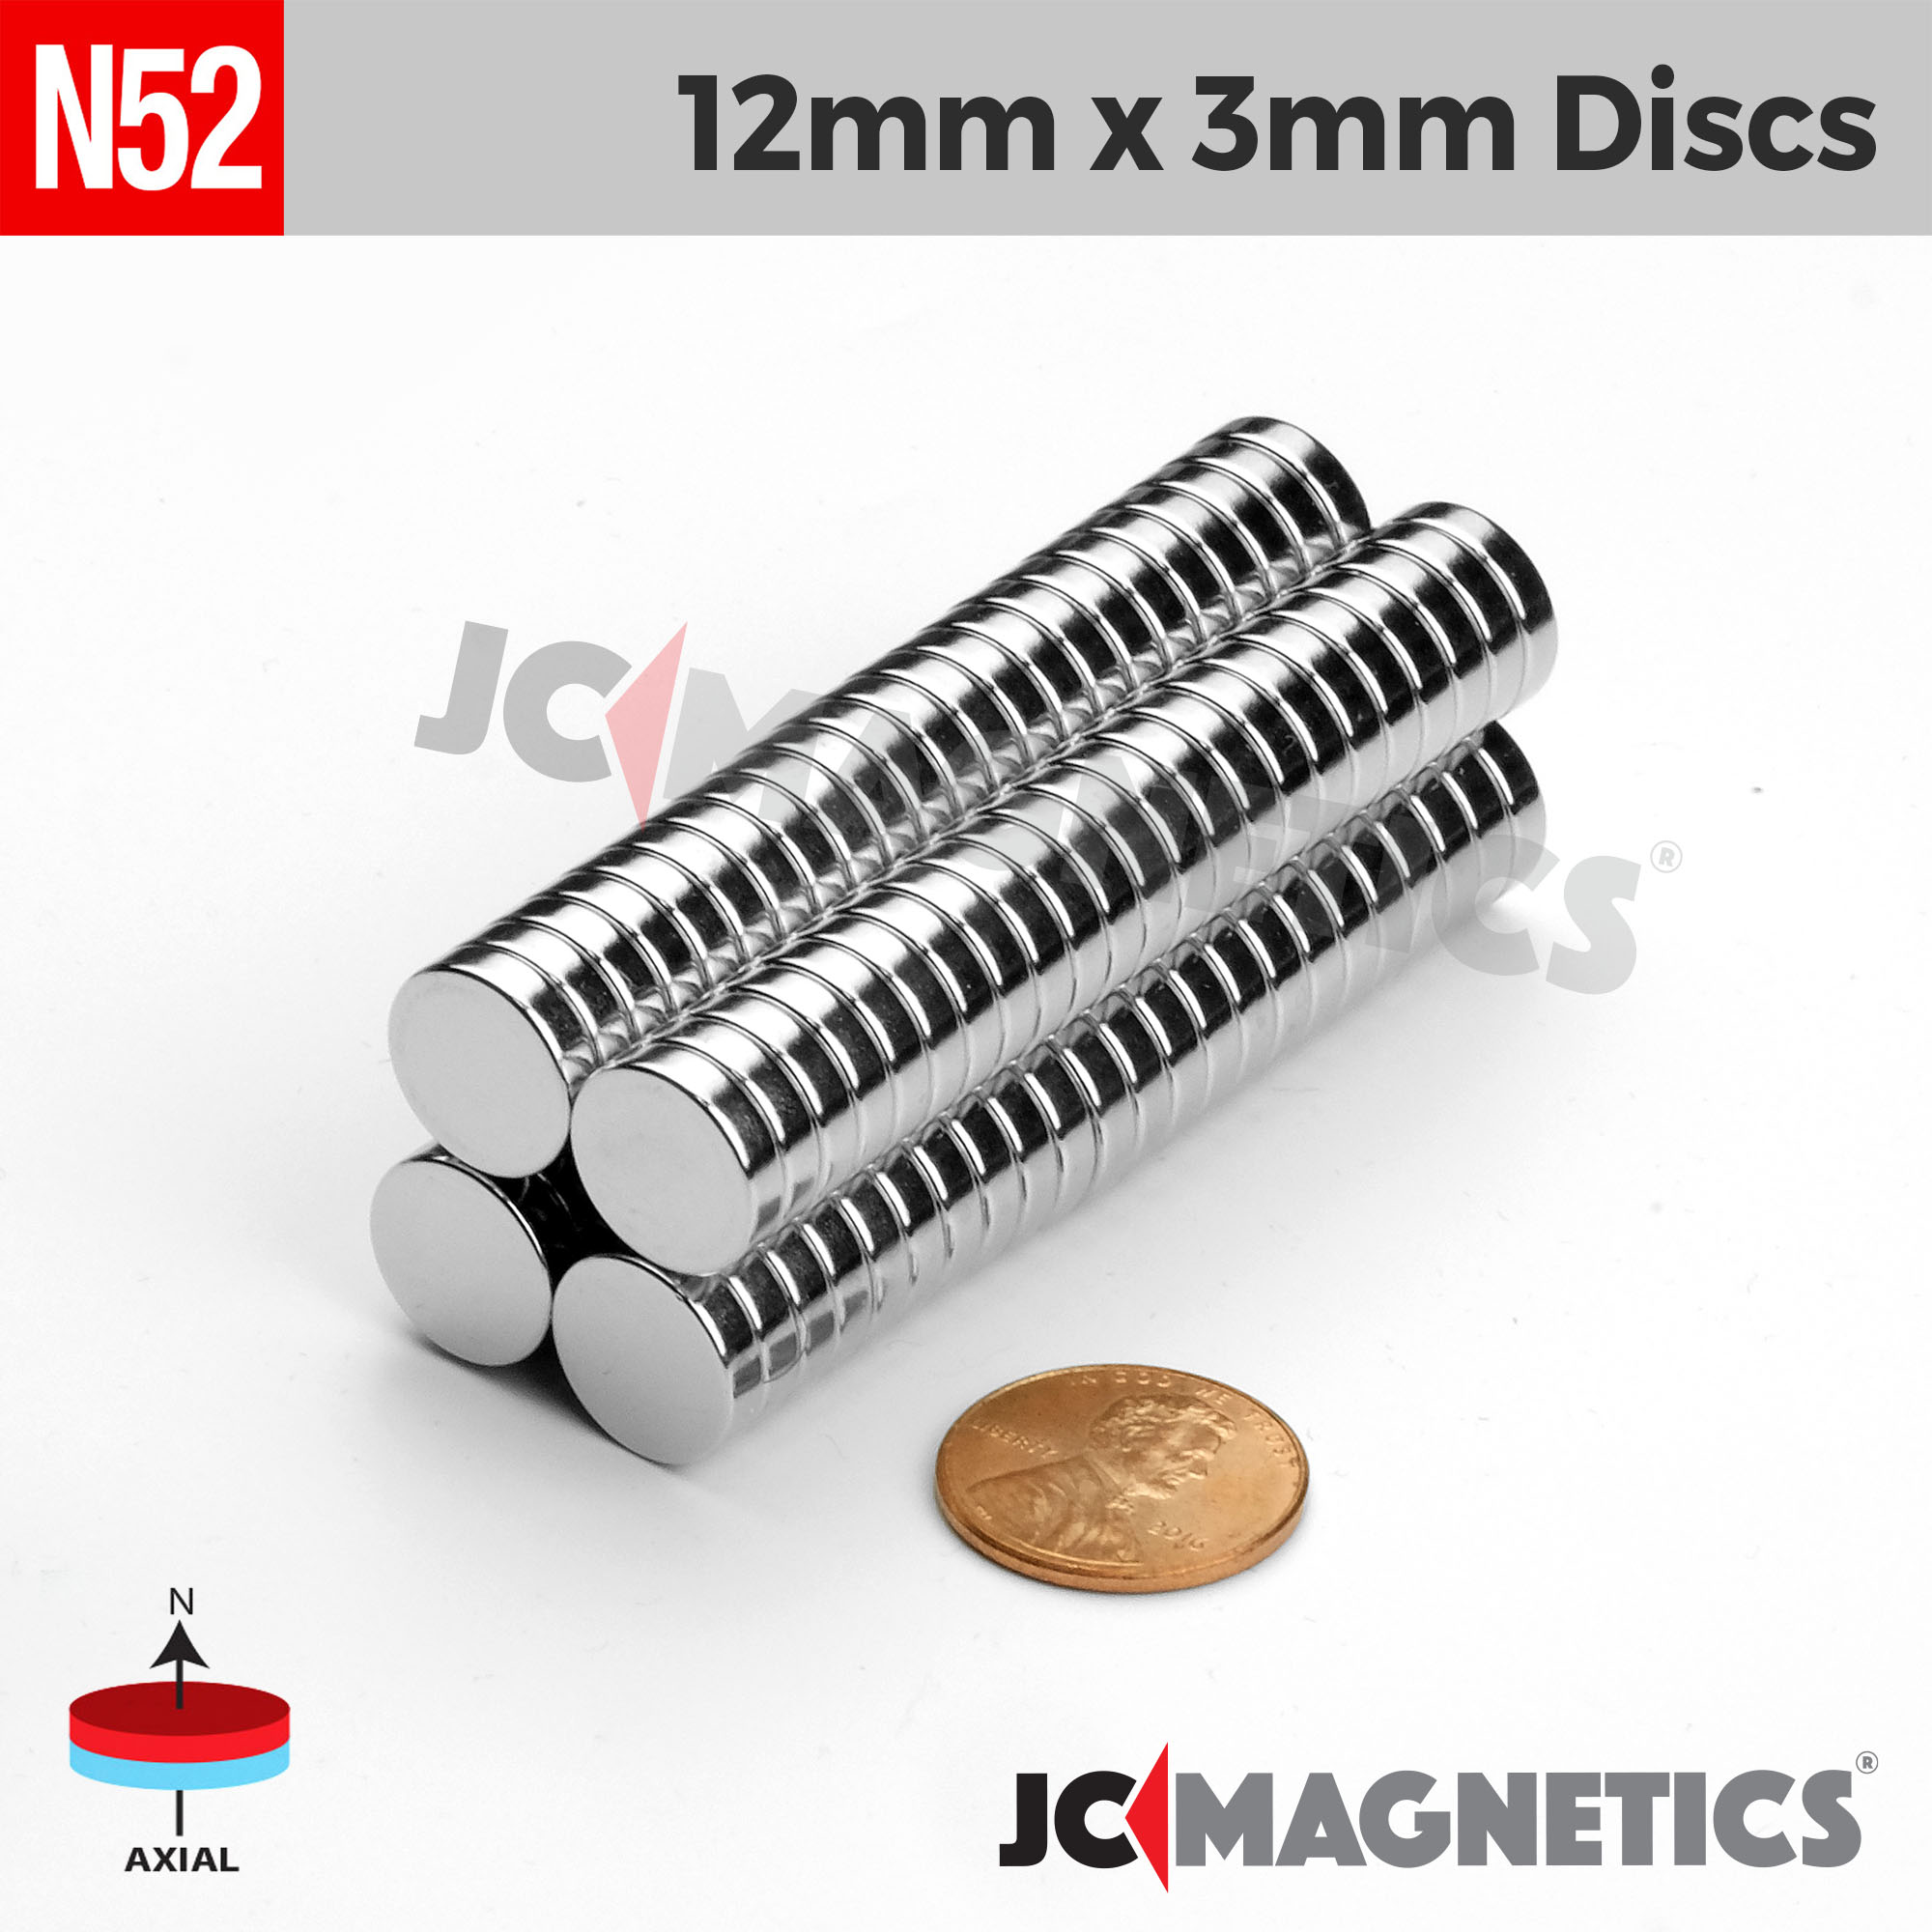 Master Magnetics Neodymium Disc Magnets with Adhesive (12pk)